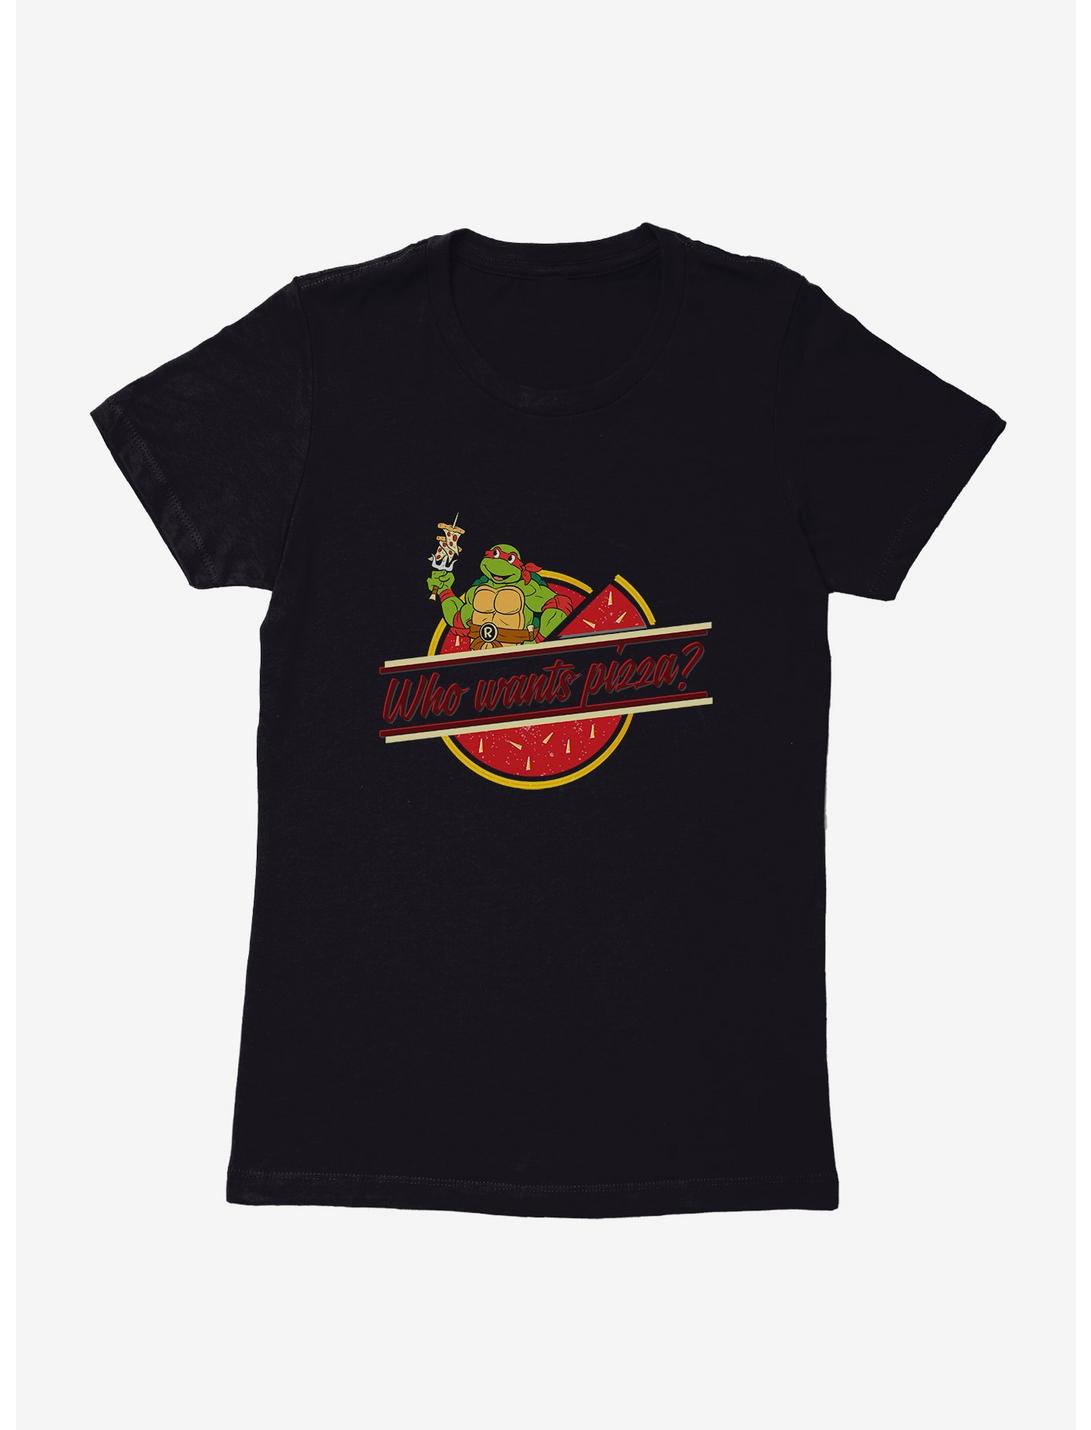 Teenage Mutant Ninja Turtles Pizza Time Womens T-Shirt, BLACK, hi-res